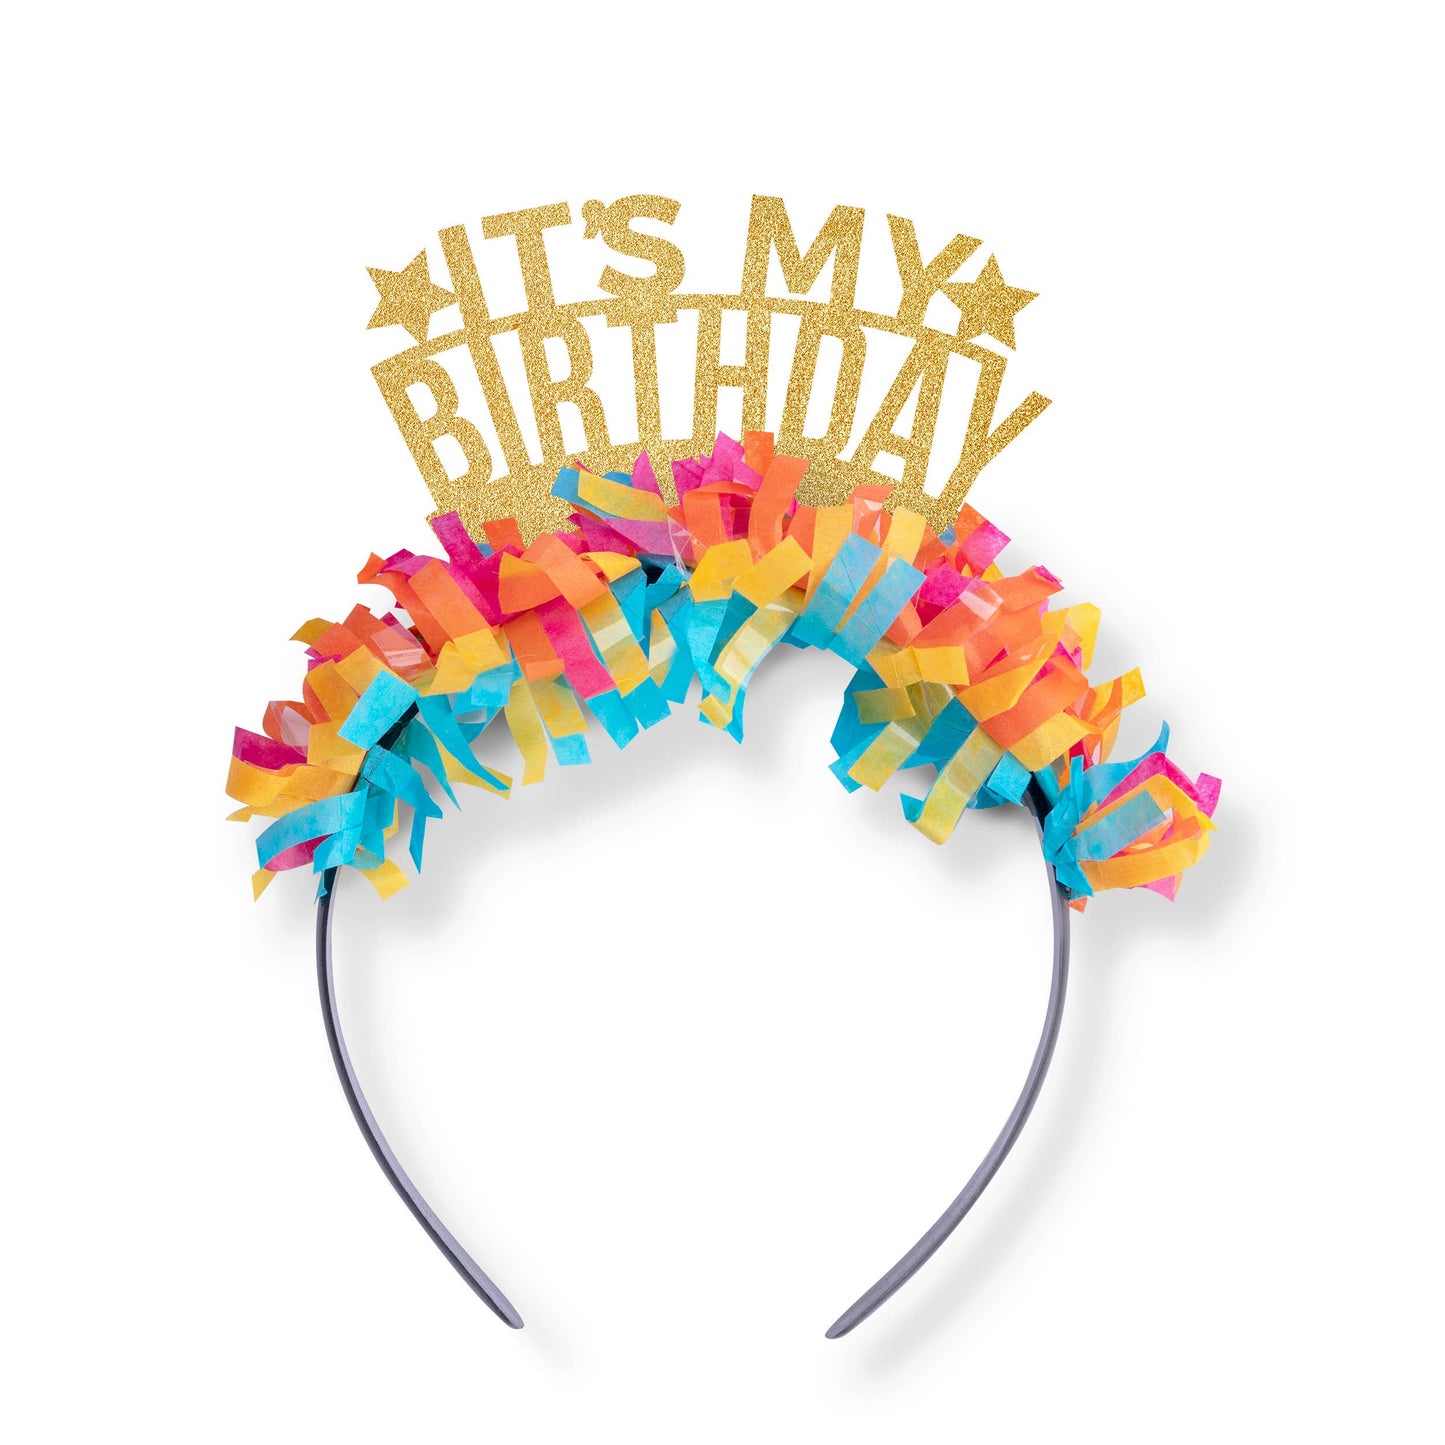 Headband Crown - It’s My Birthday